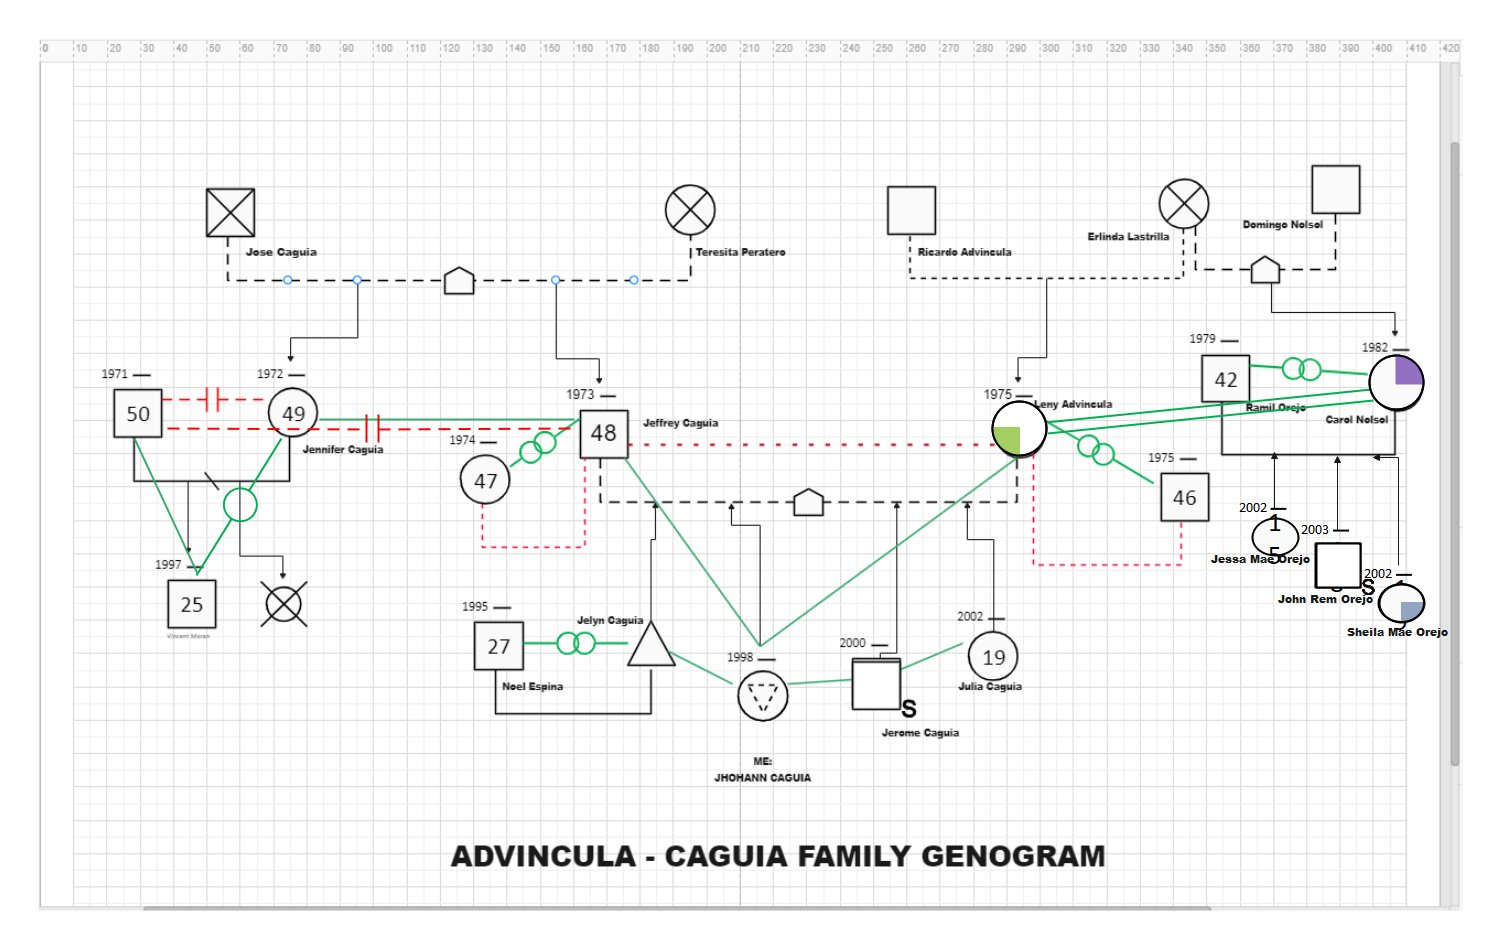 ADVINCULA's FAMILY GENOGRAM